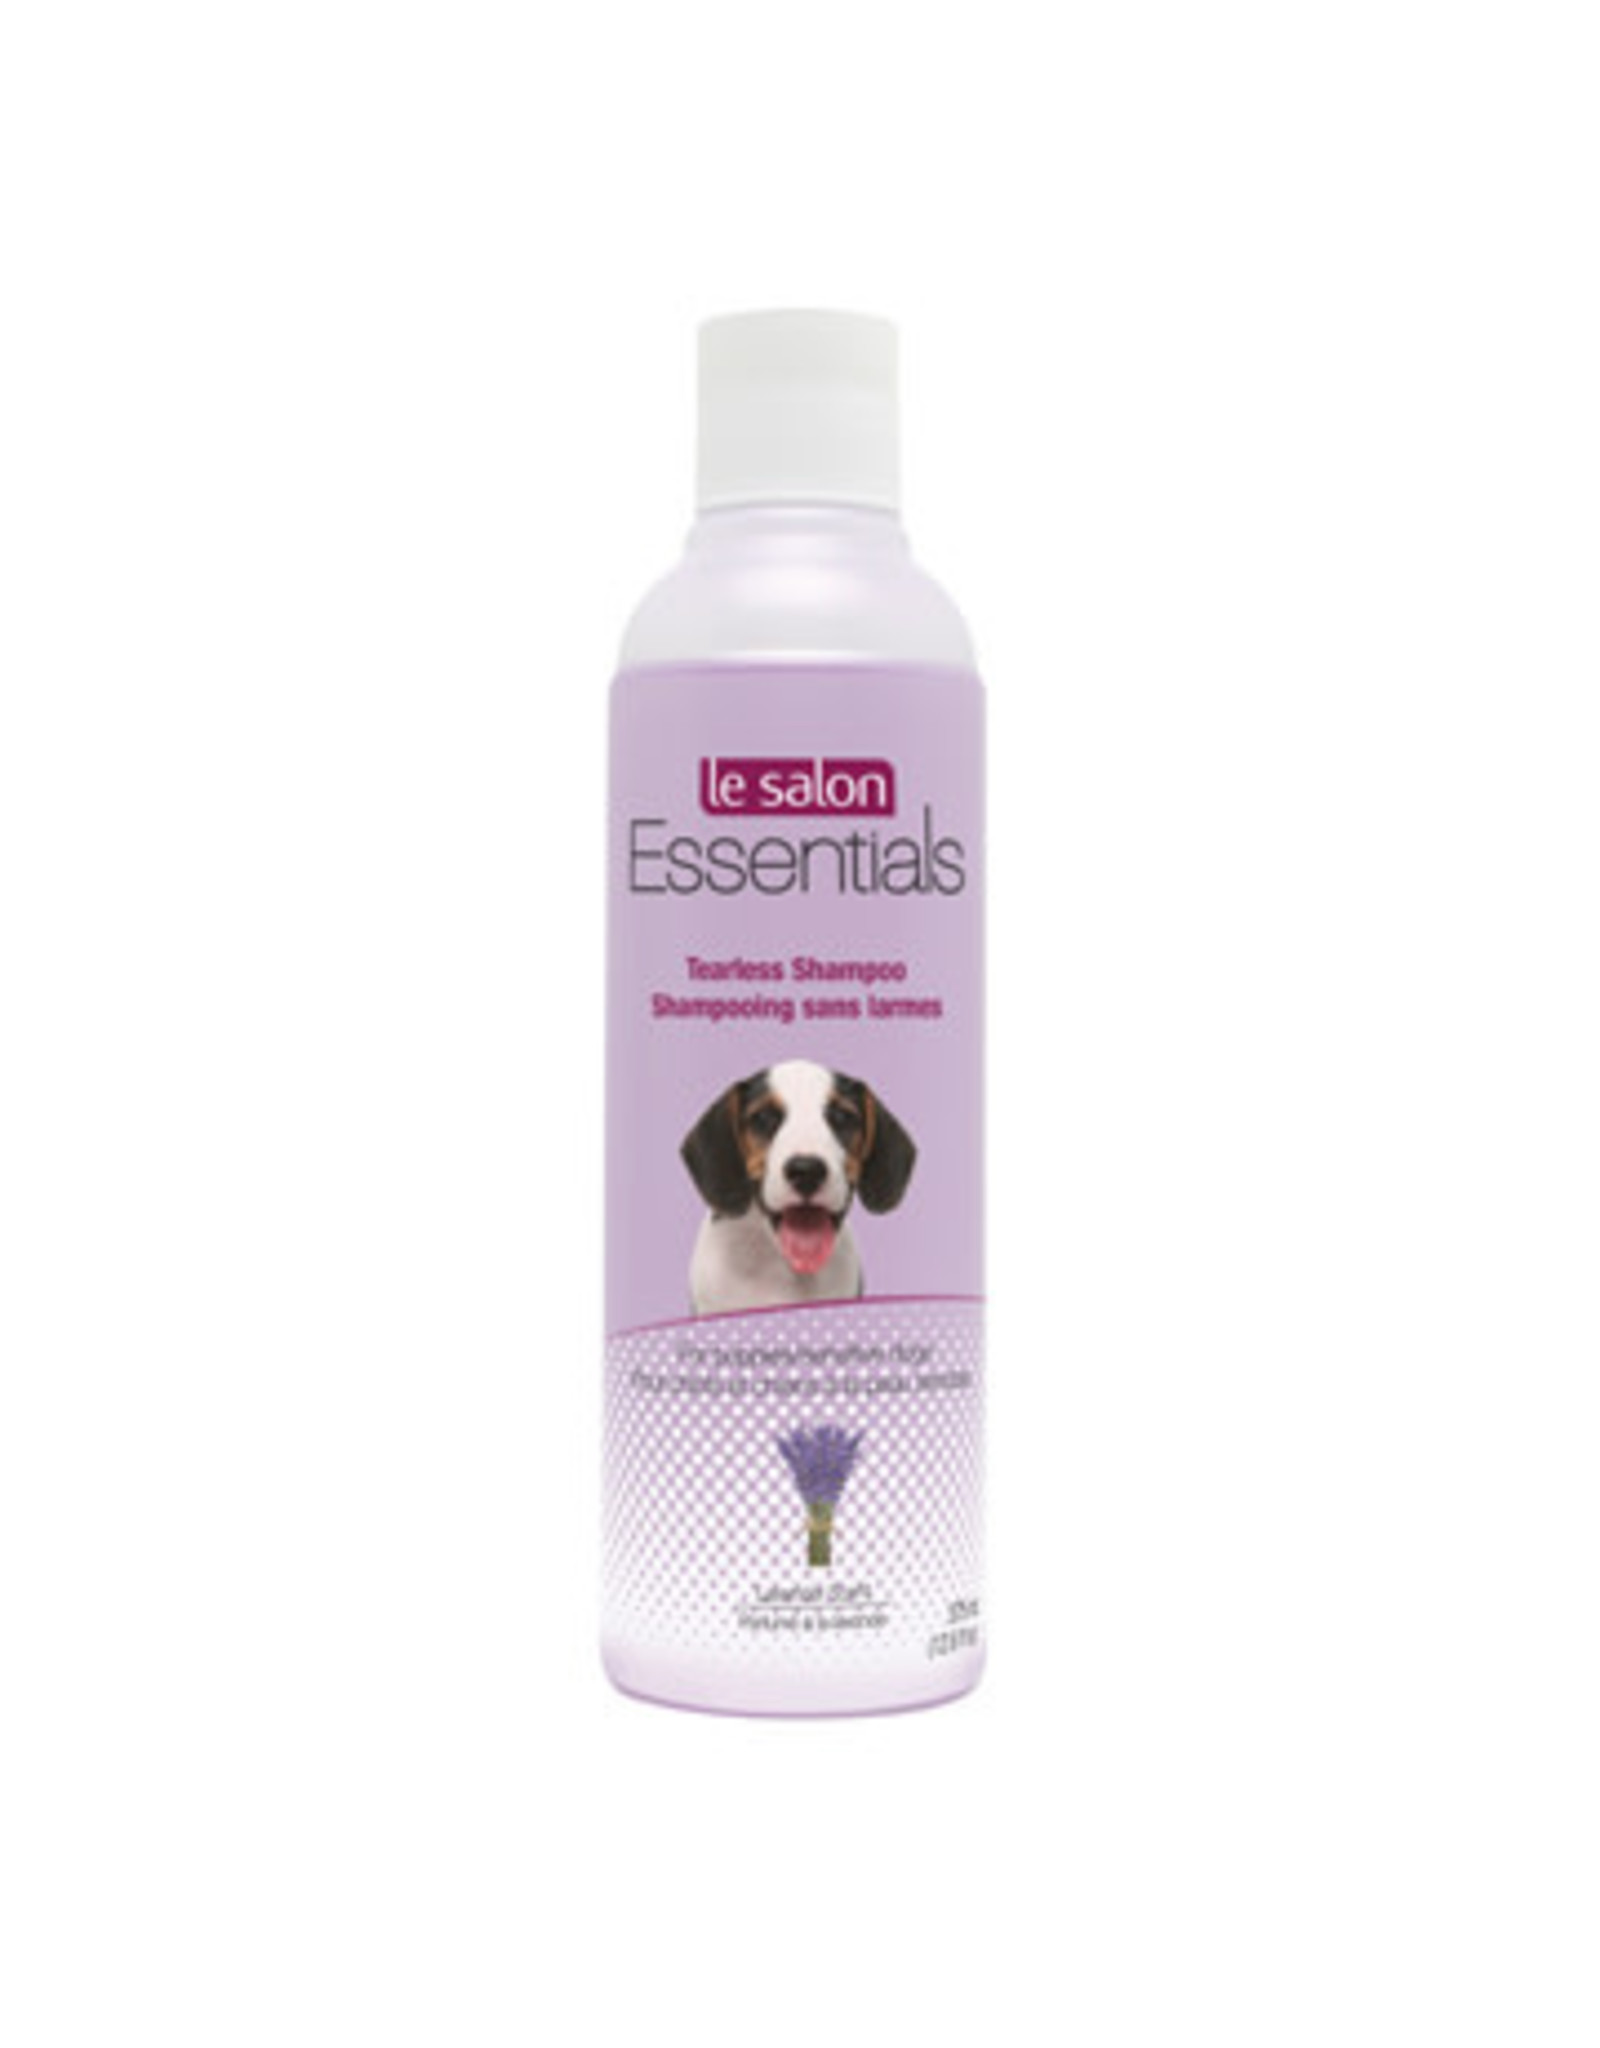 Le Salon LeSalon Essentials Tearless Shampoo - 375 mL (12.6 fl oz)